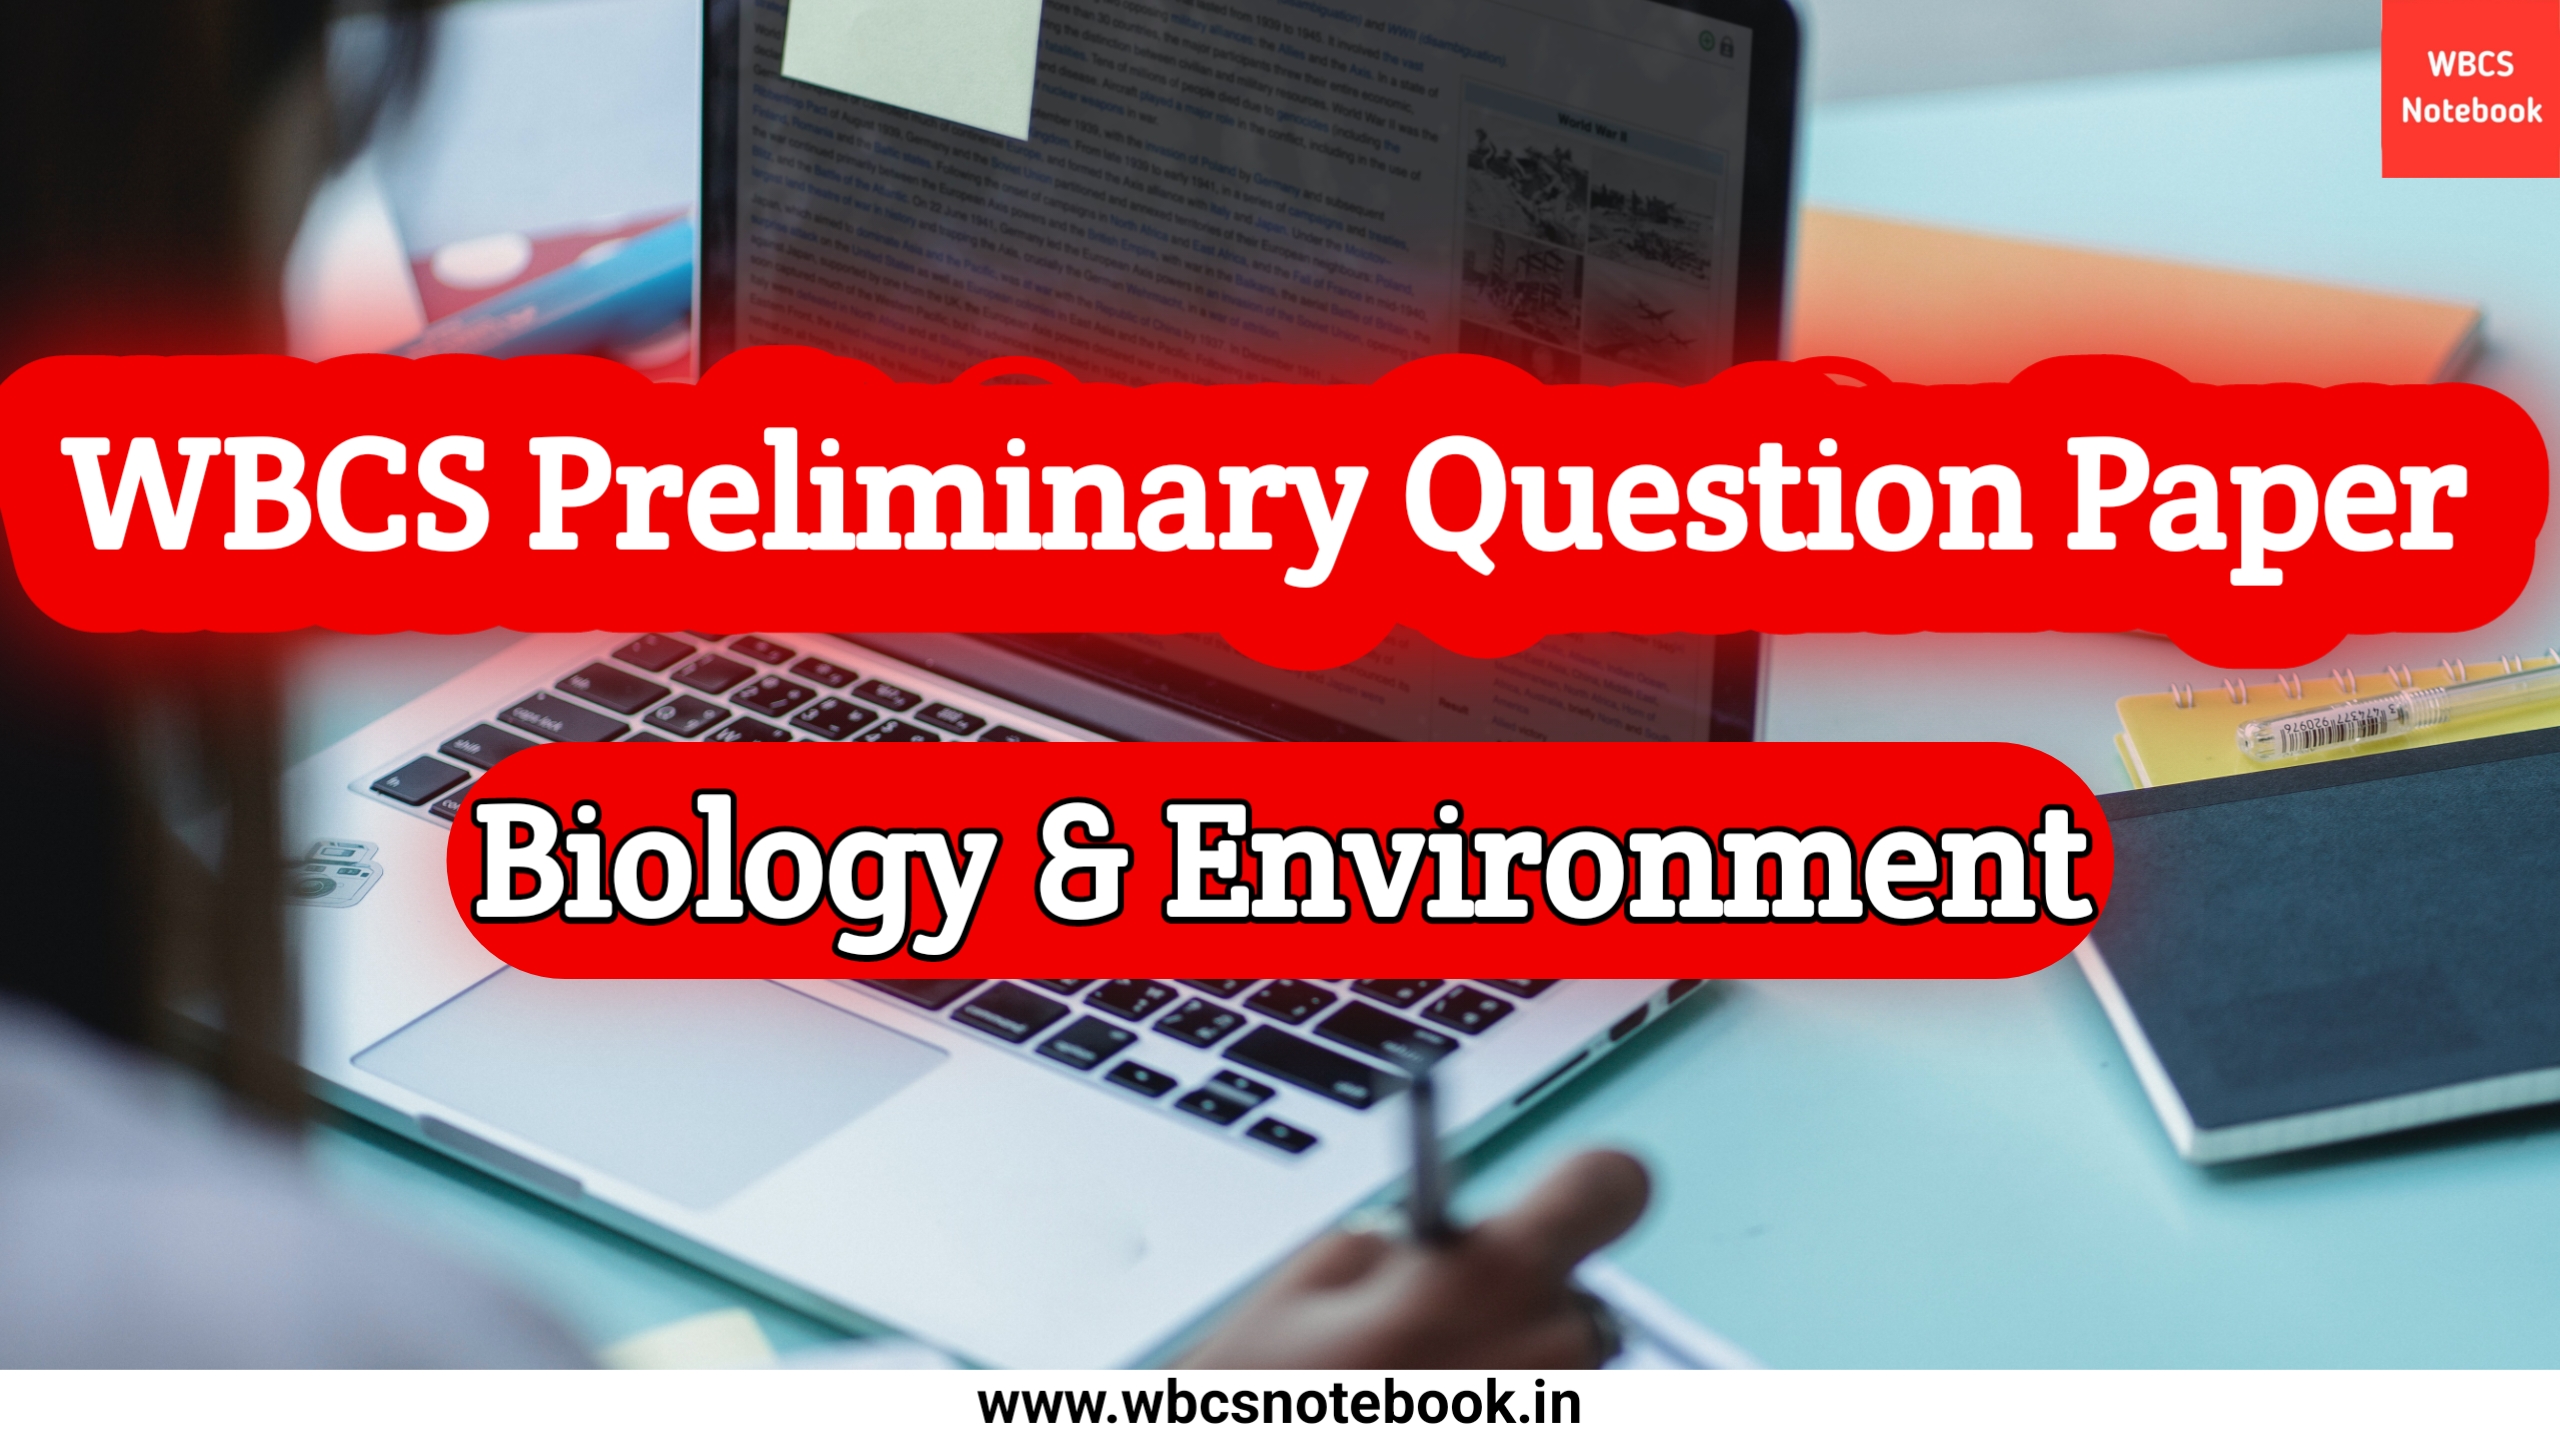 Biology & Environment - WBCS Preliminary Question Paper